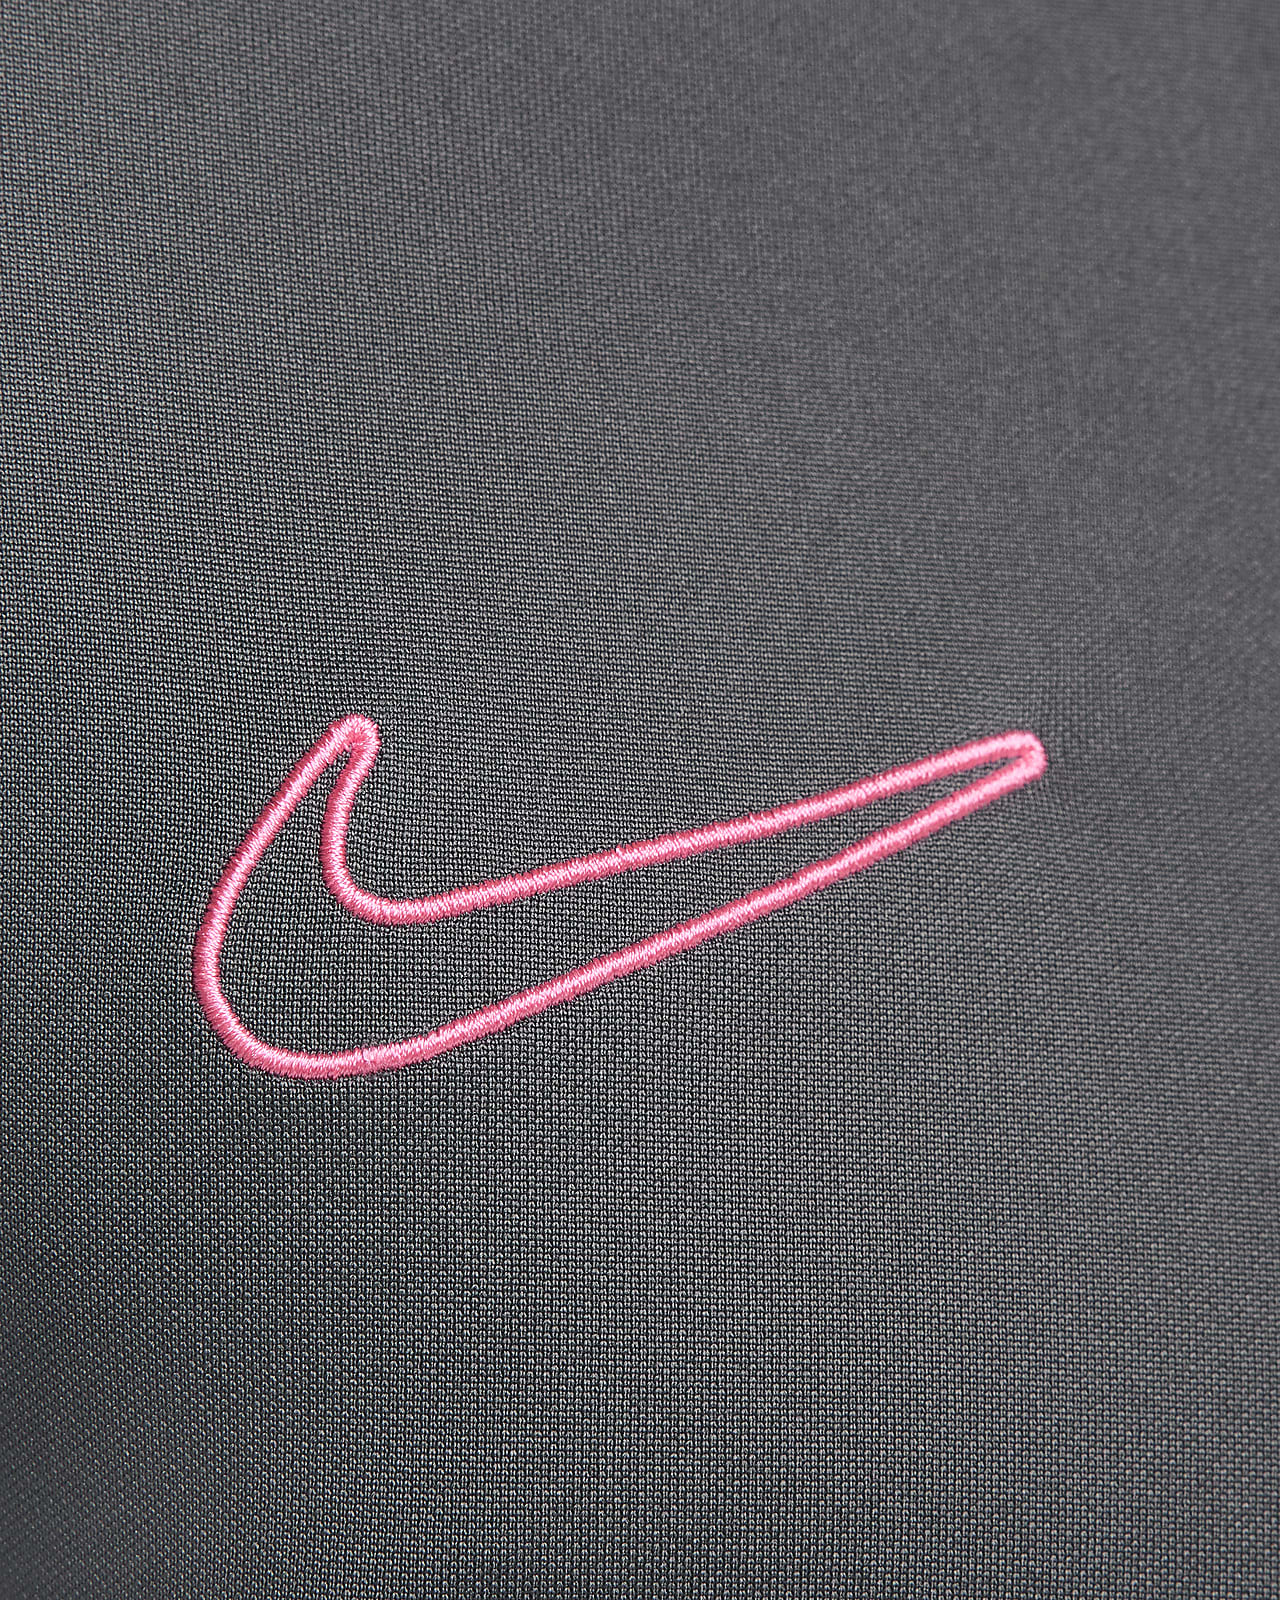 Nike Academy Men's Dri-FIT Short-Sleeve Soccer Top